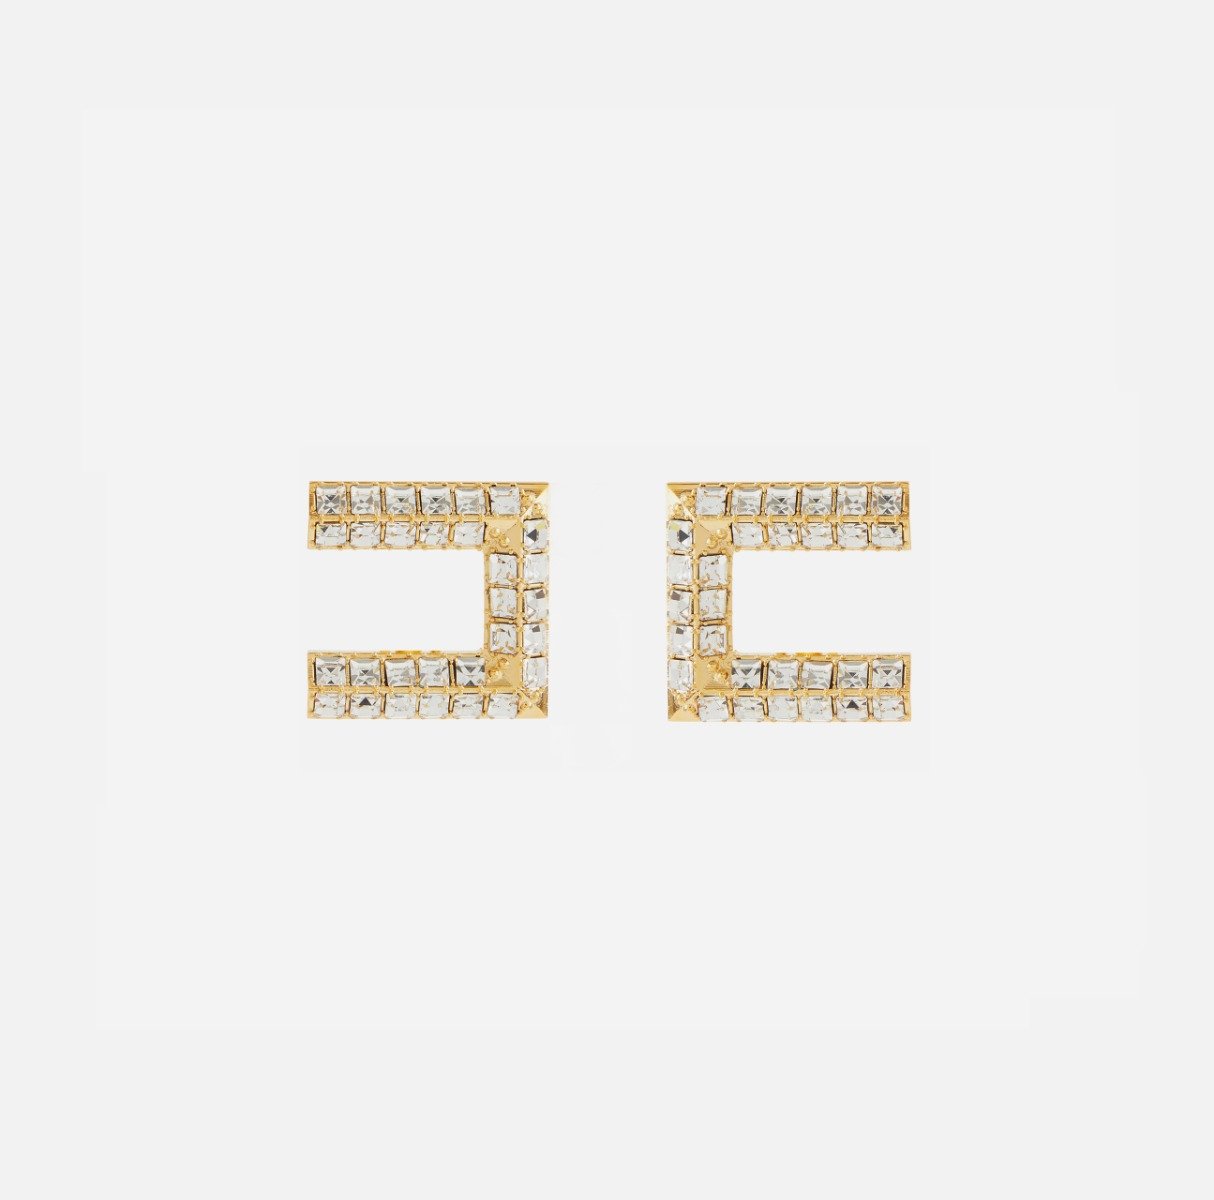 Earrings with maxi logo made of rhinestones - Elisabetta Franchi